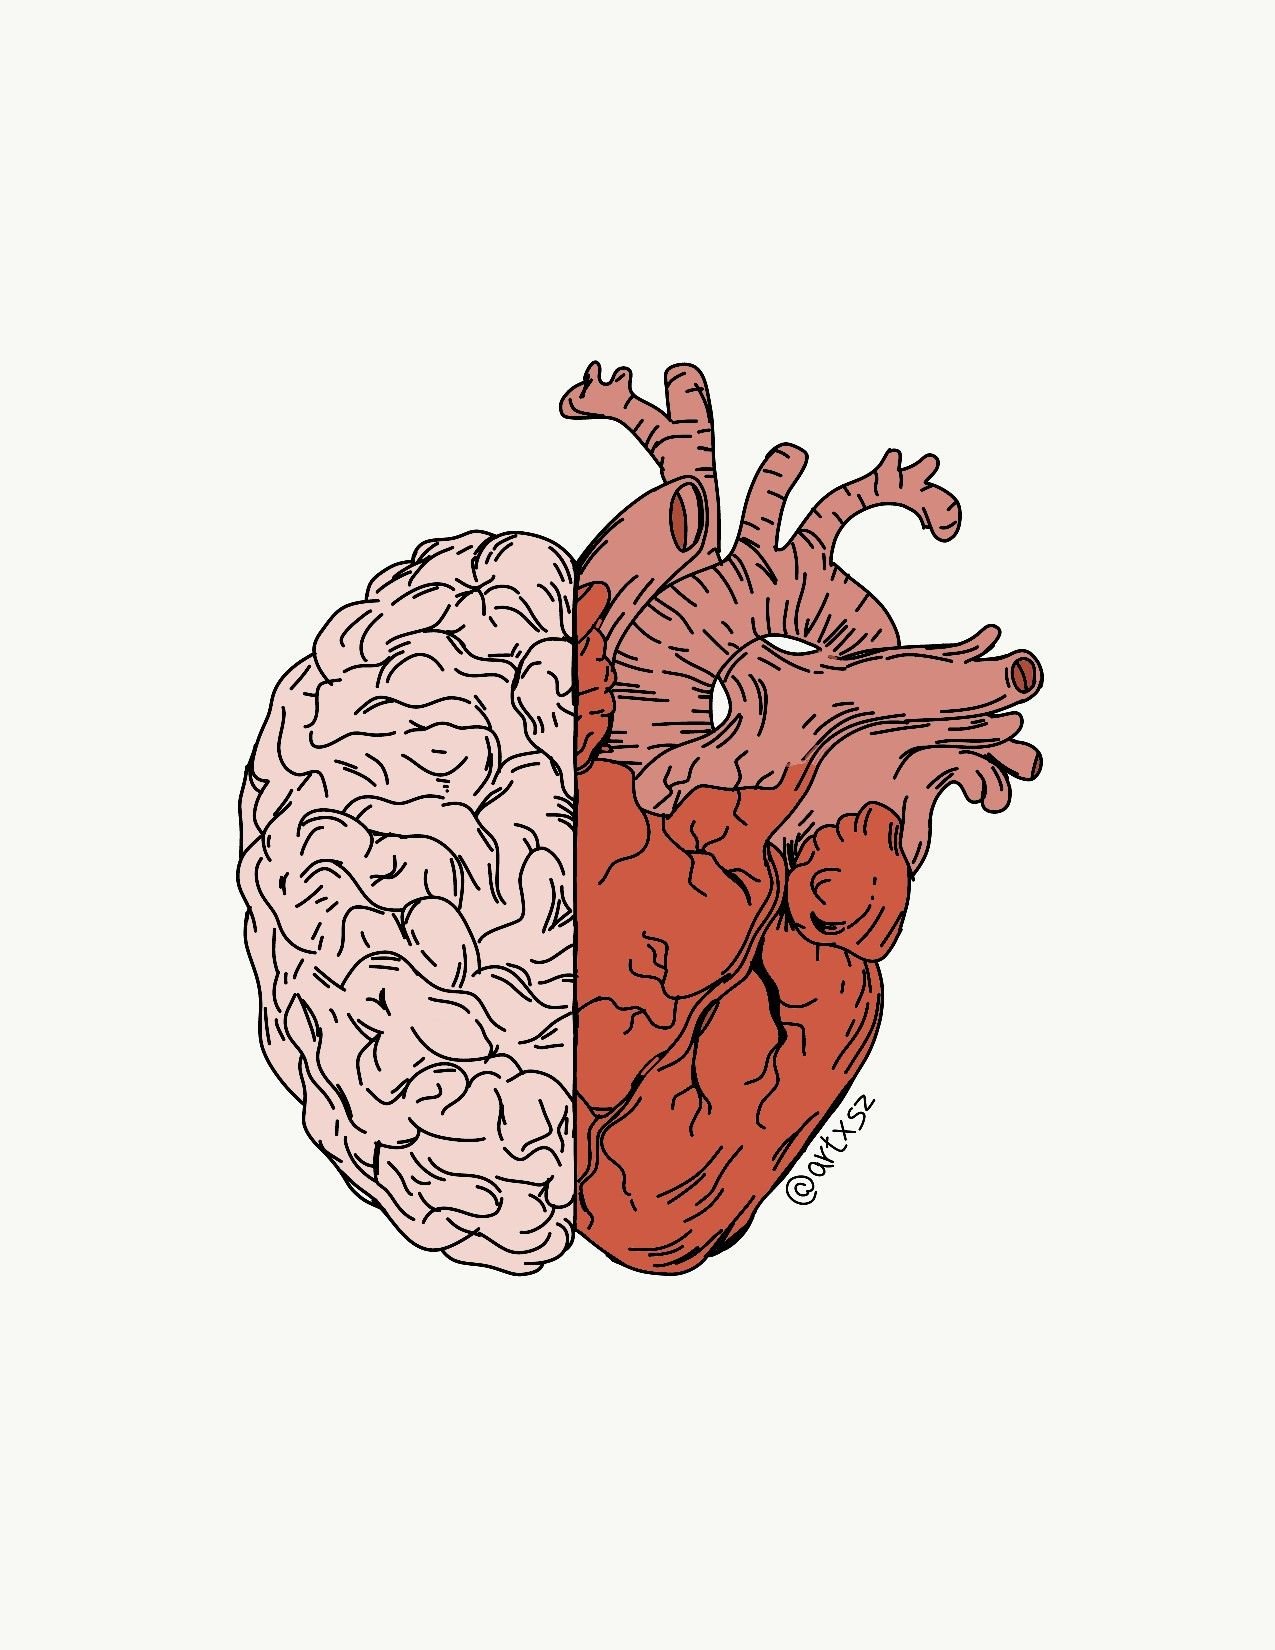 Heart and brain. Мозг и сердце. Мозг нарисованный. Мозг человека арт. Мозг и сердце вместе.